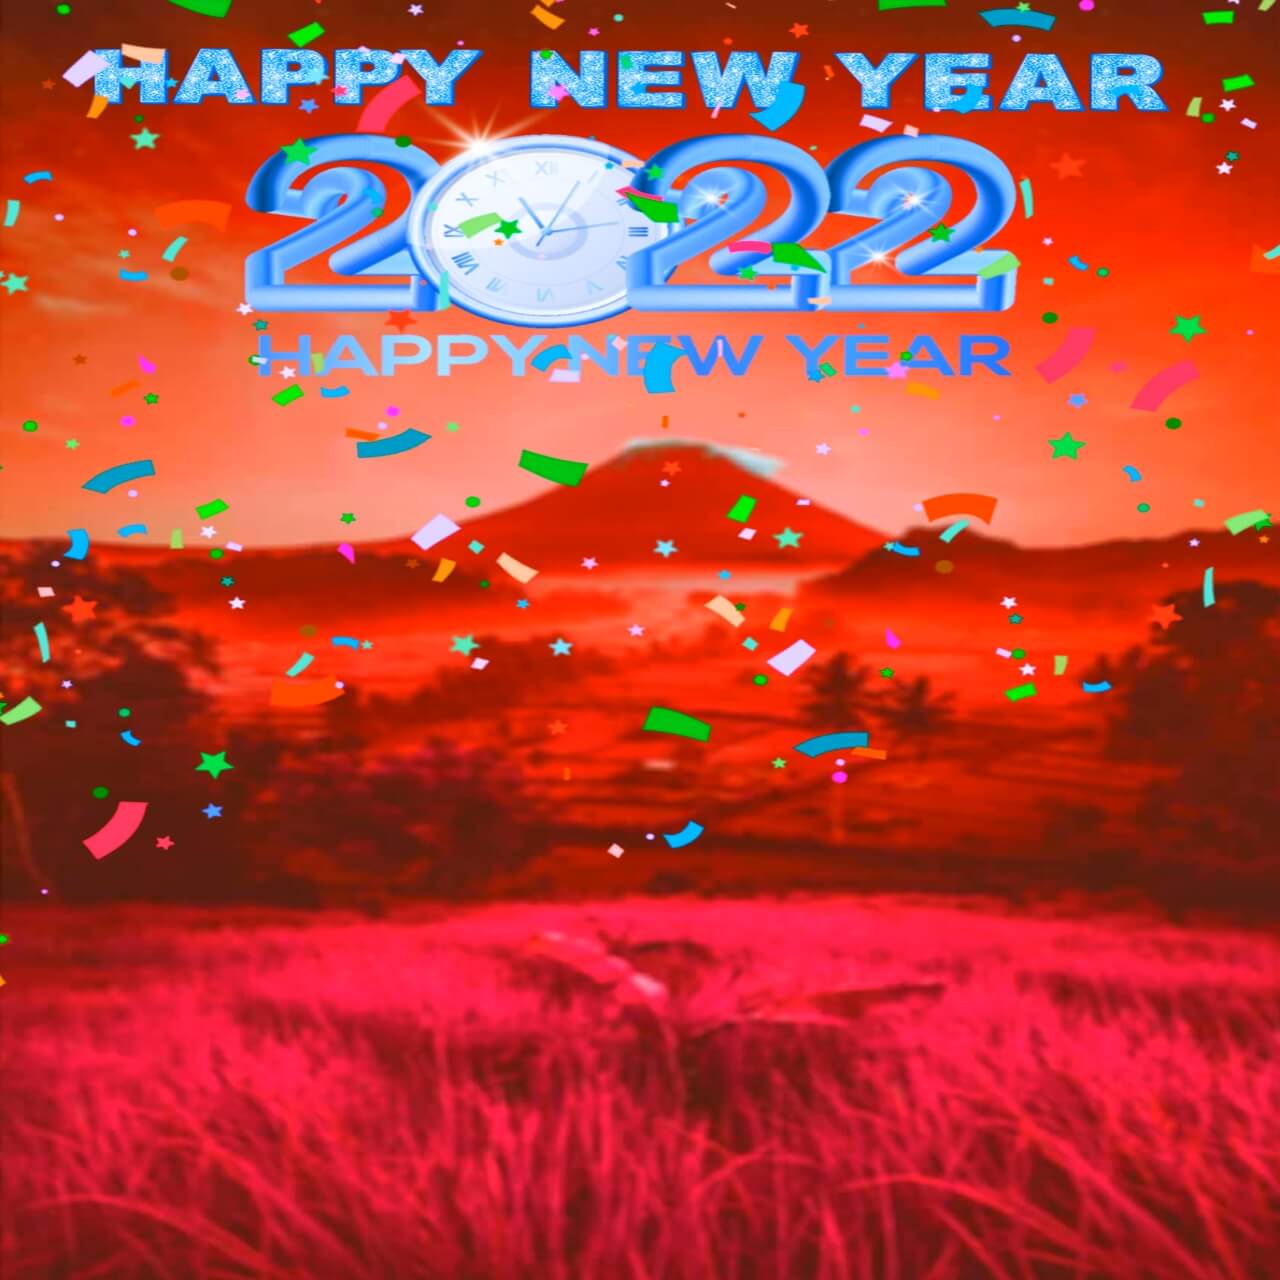  2022 CB PicsArt Editing Happy New Year Background HD rED | CBEditz